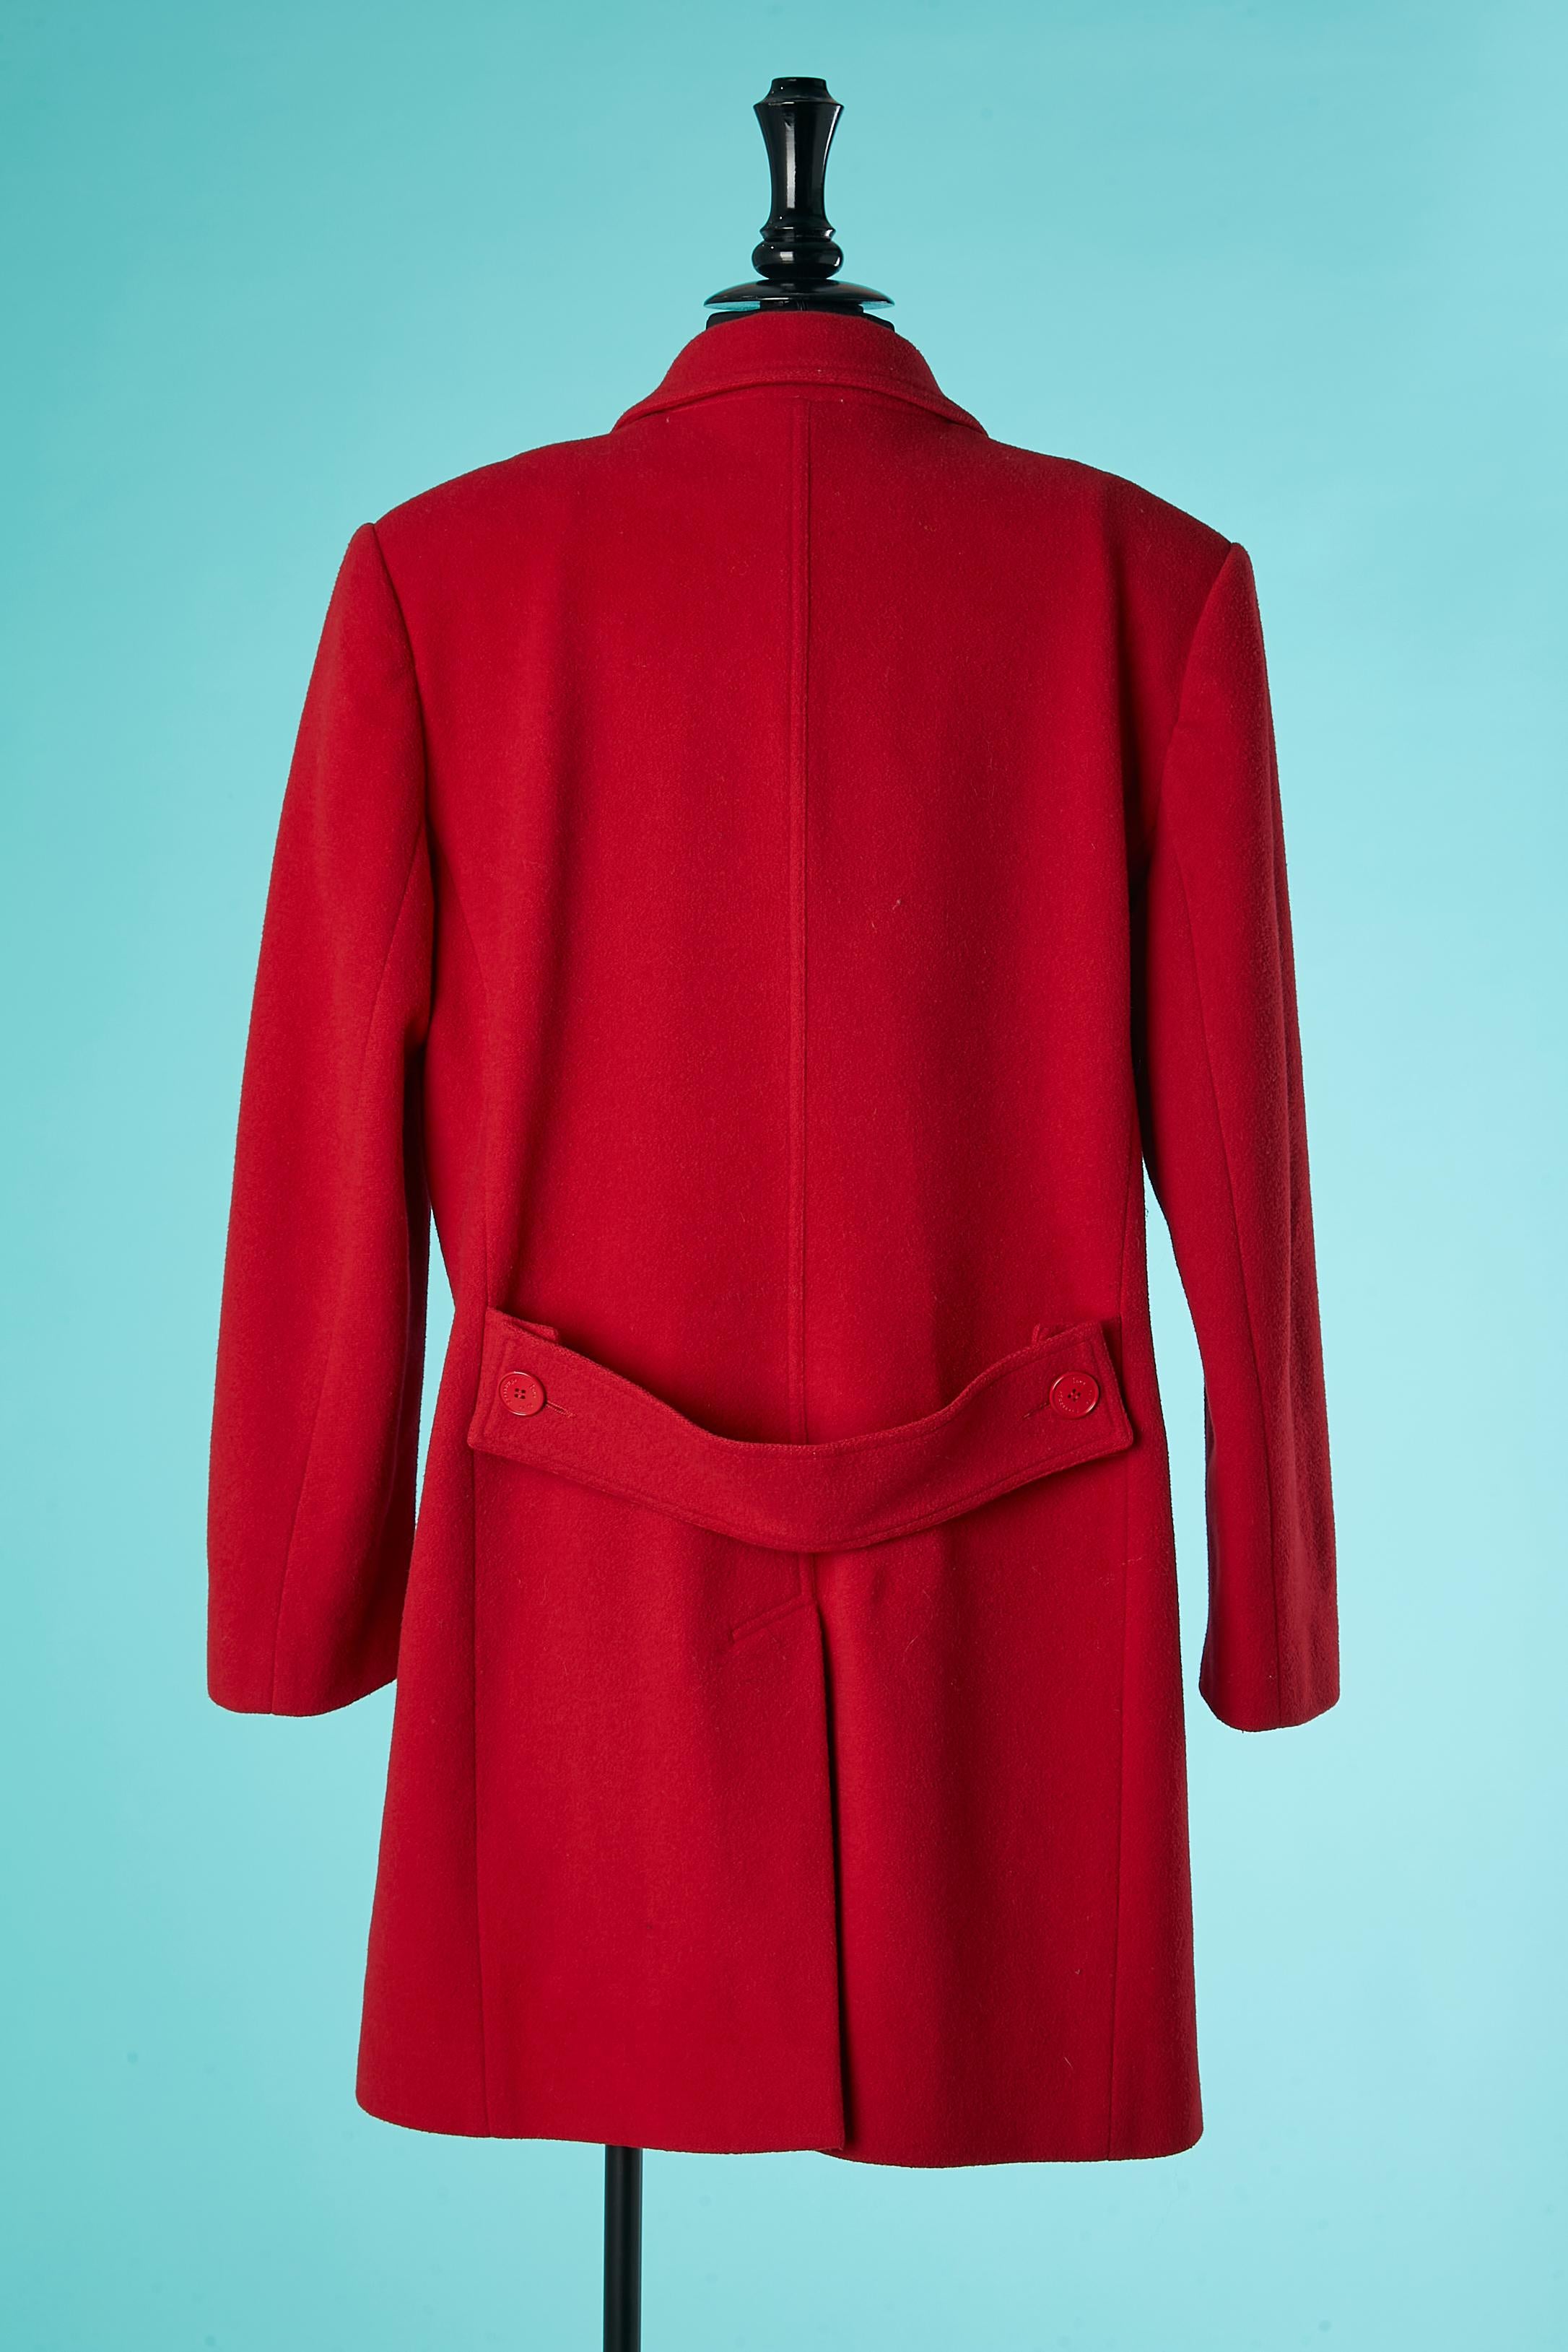 Red double-breasted coat in wool Ines de la Fressange  For Sale 2